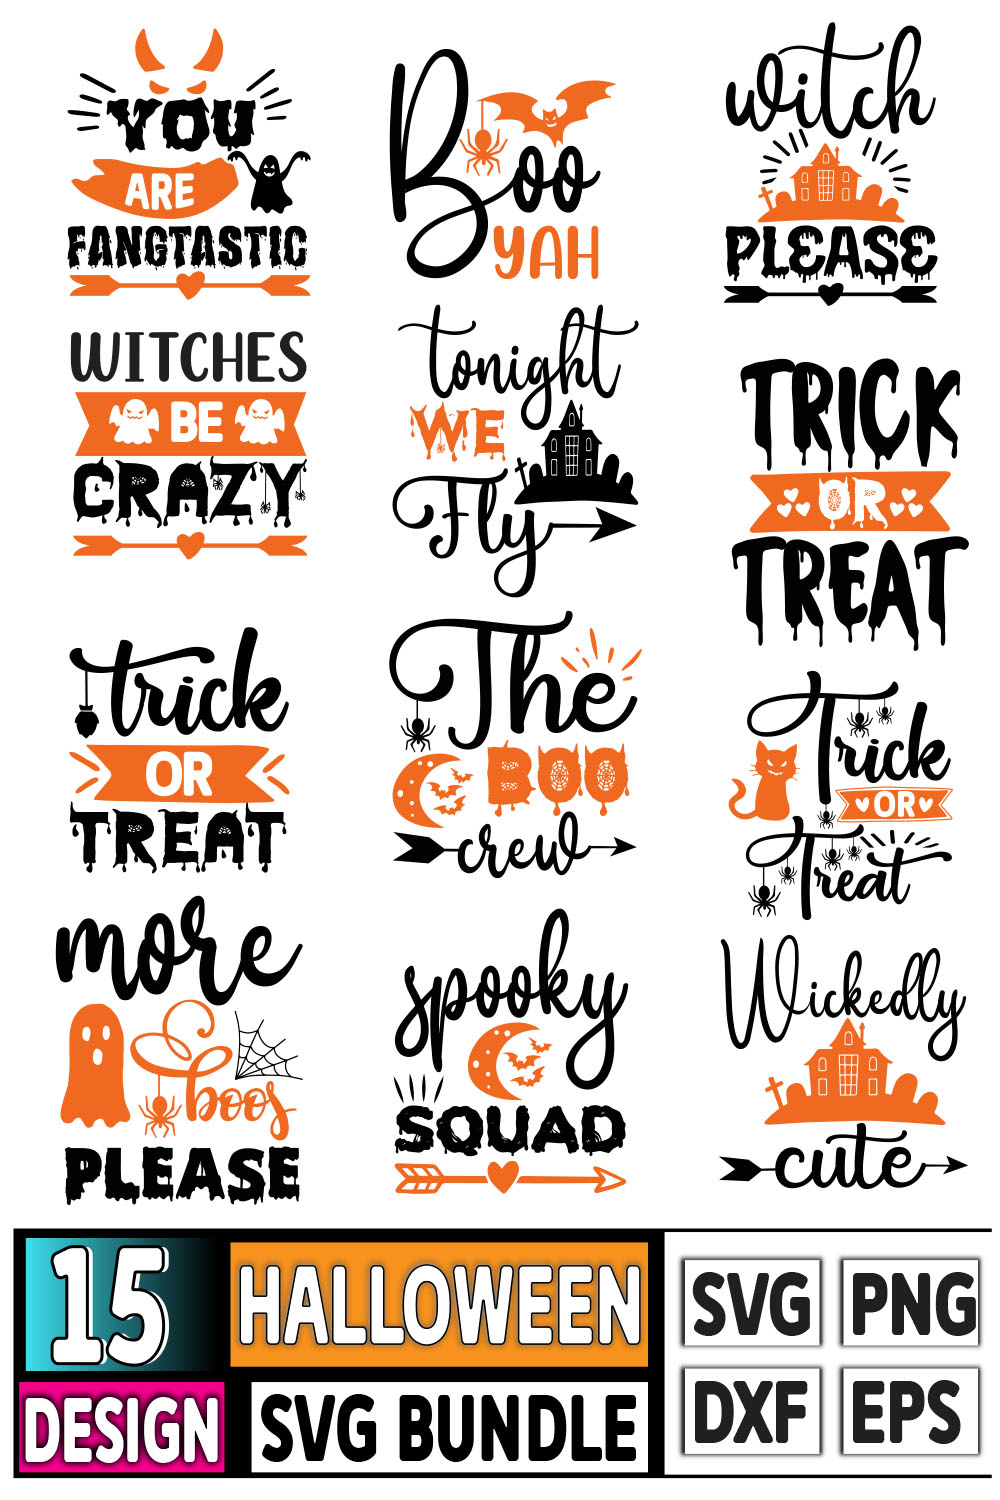 Halloween SVG Bundle pinterest image.